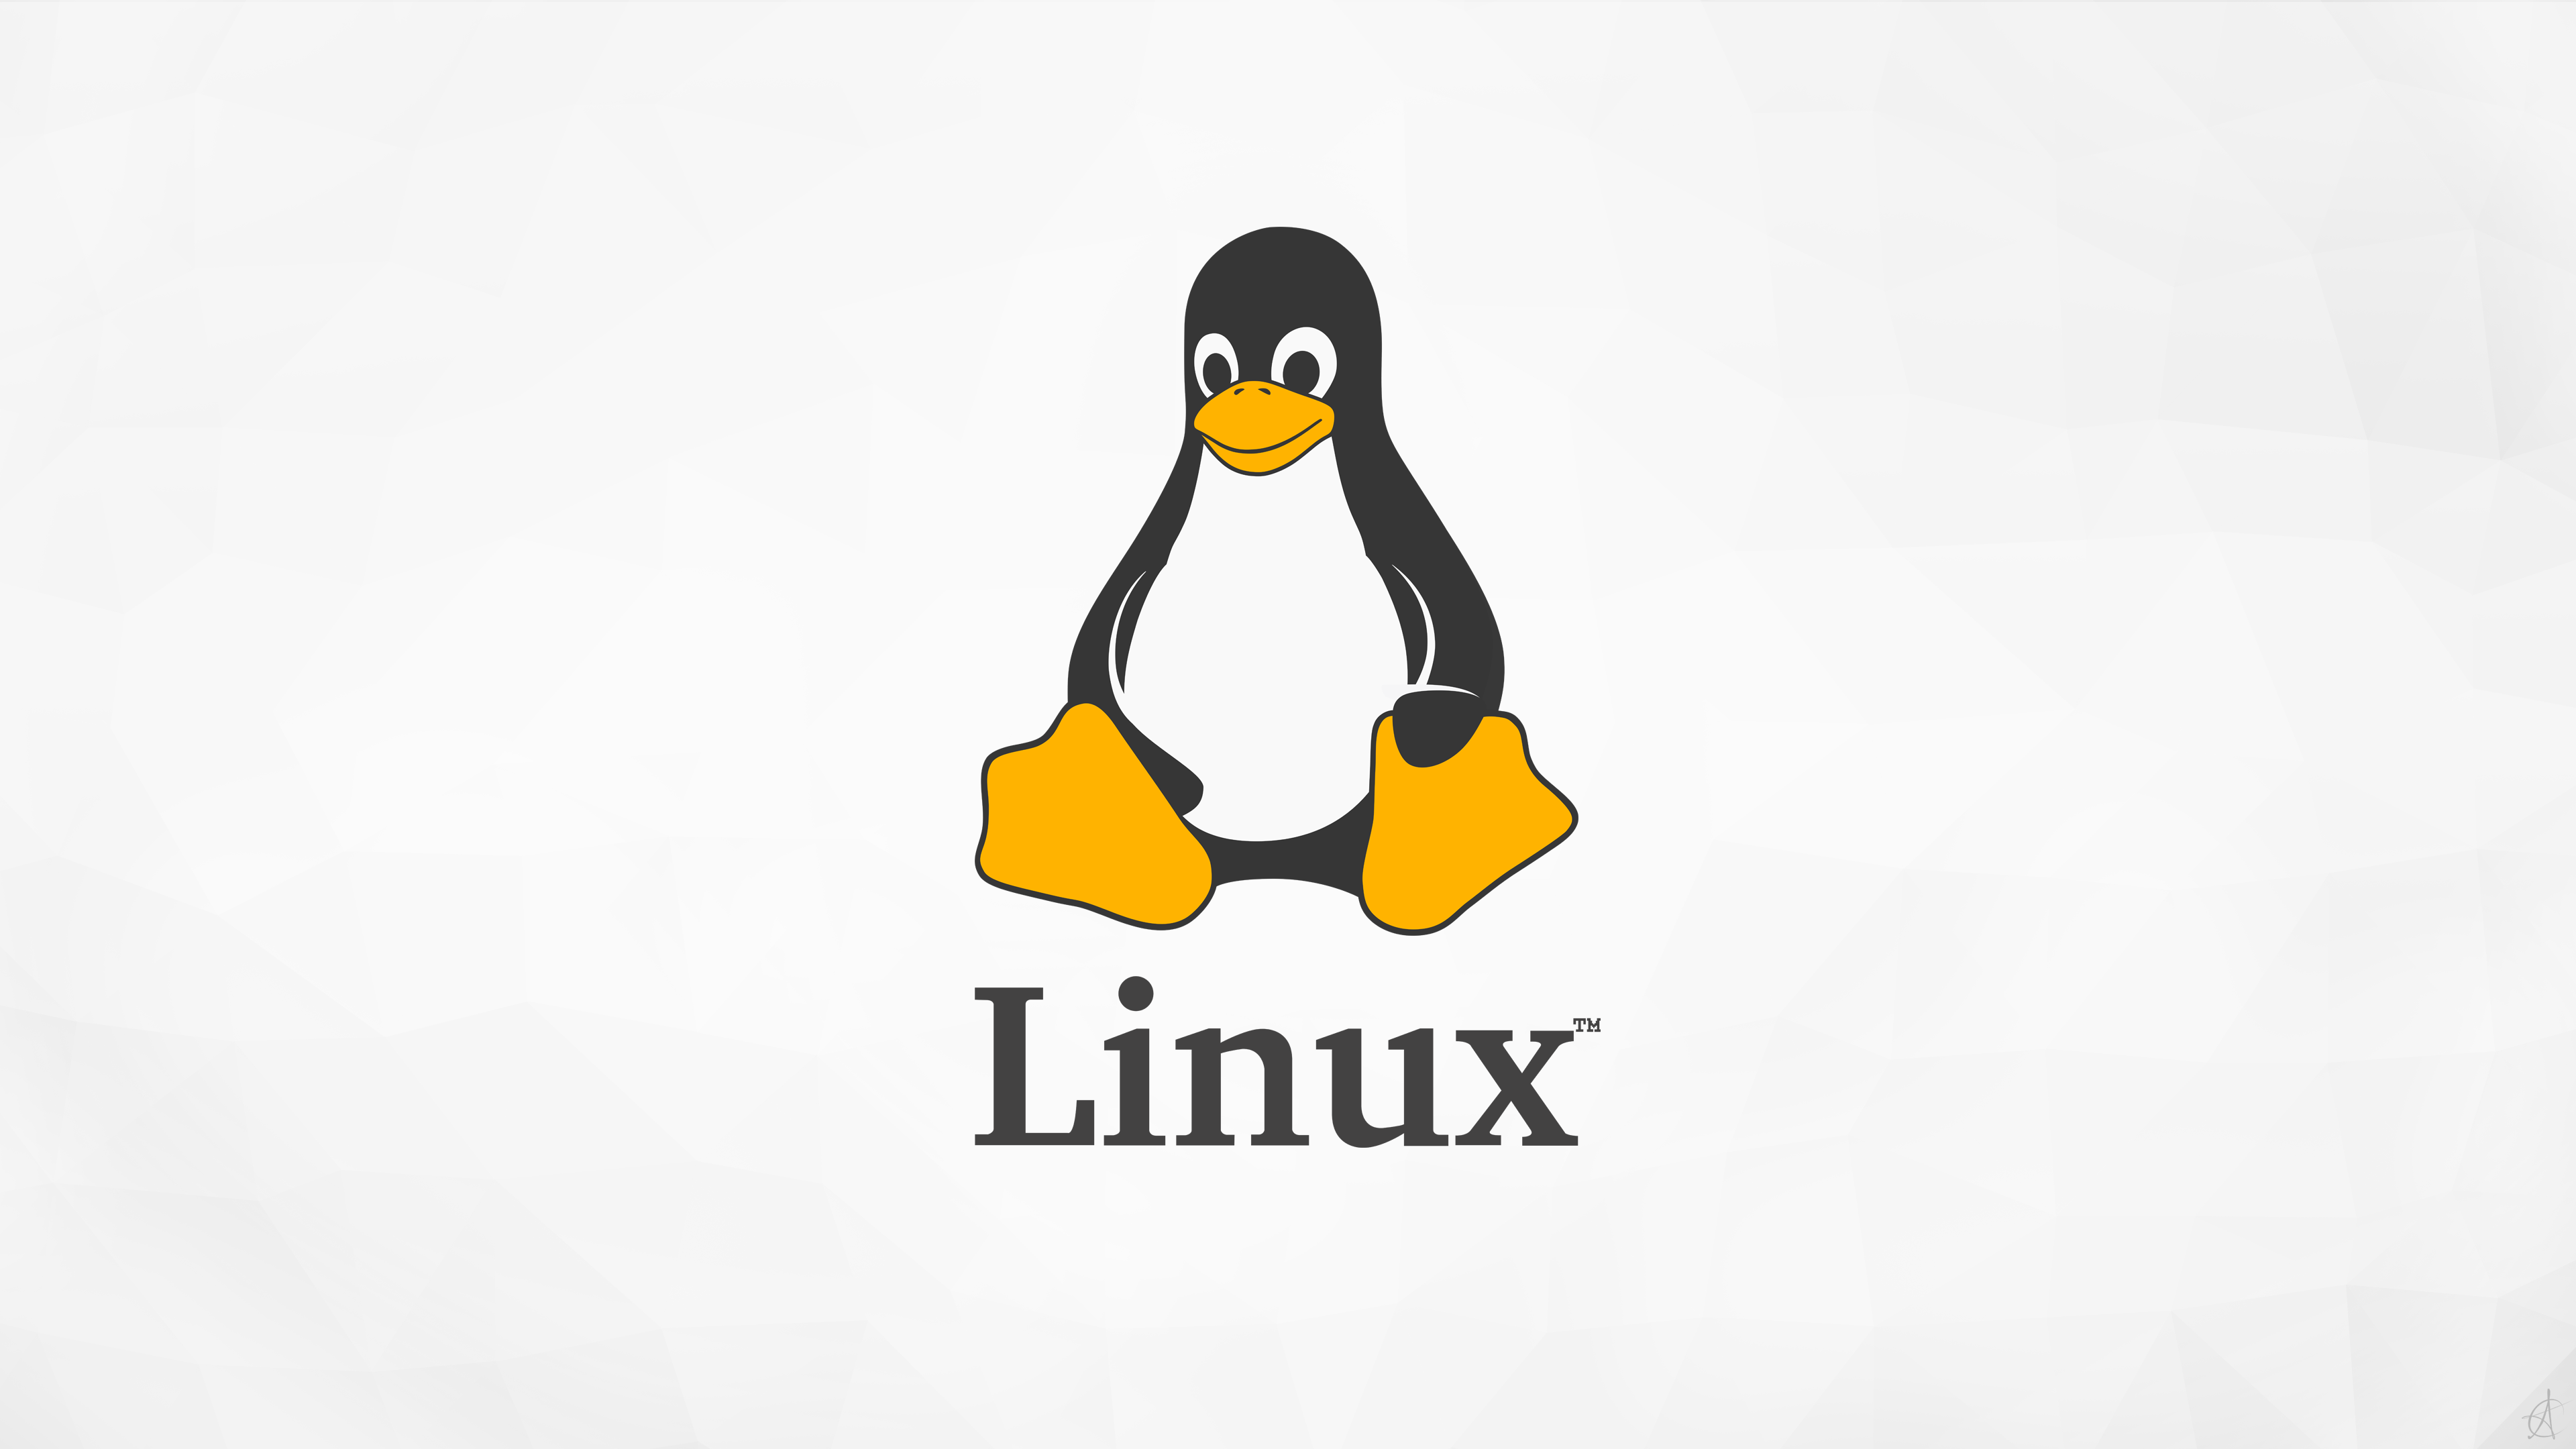 Ubuntu Server Guide Ubuntu 20.04 LTS (Focal Fossa)